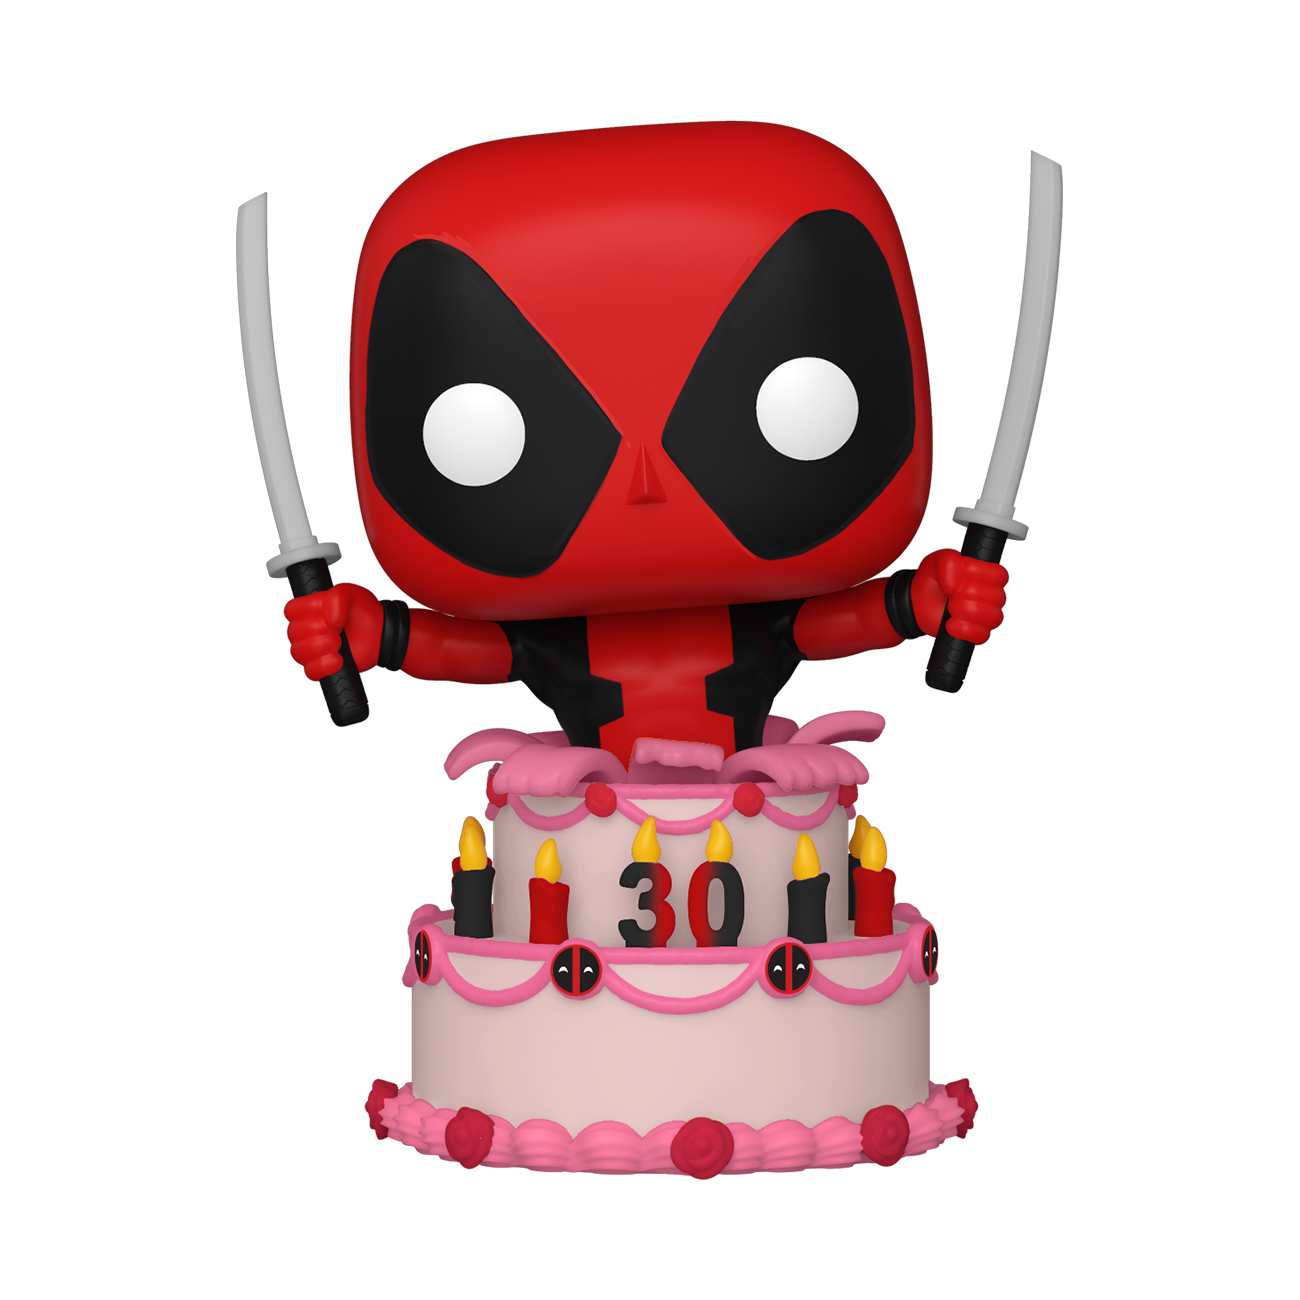 Deadpool: Pop! Vinyl Figure: Deadpool In Cake (30th Anniversary)